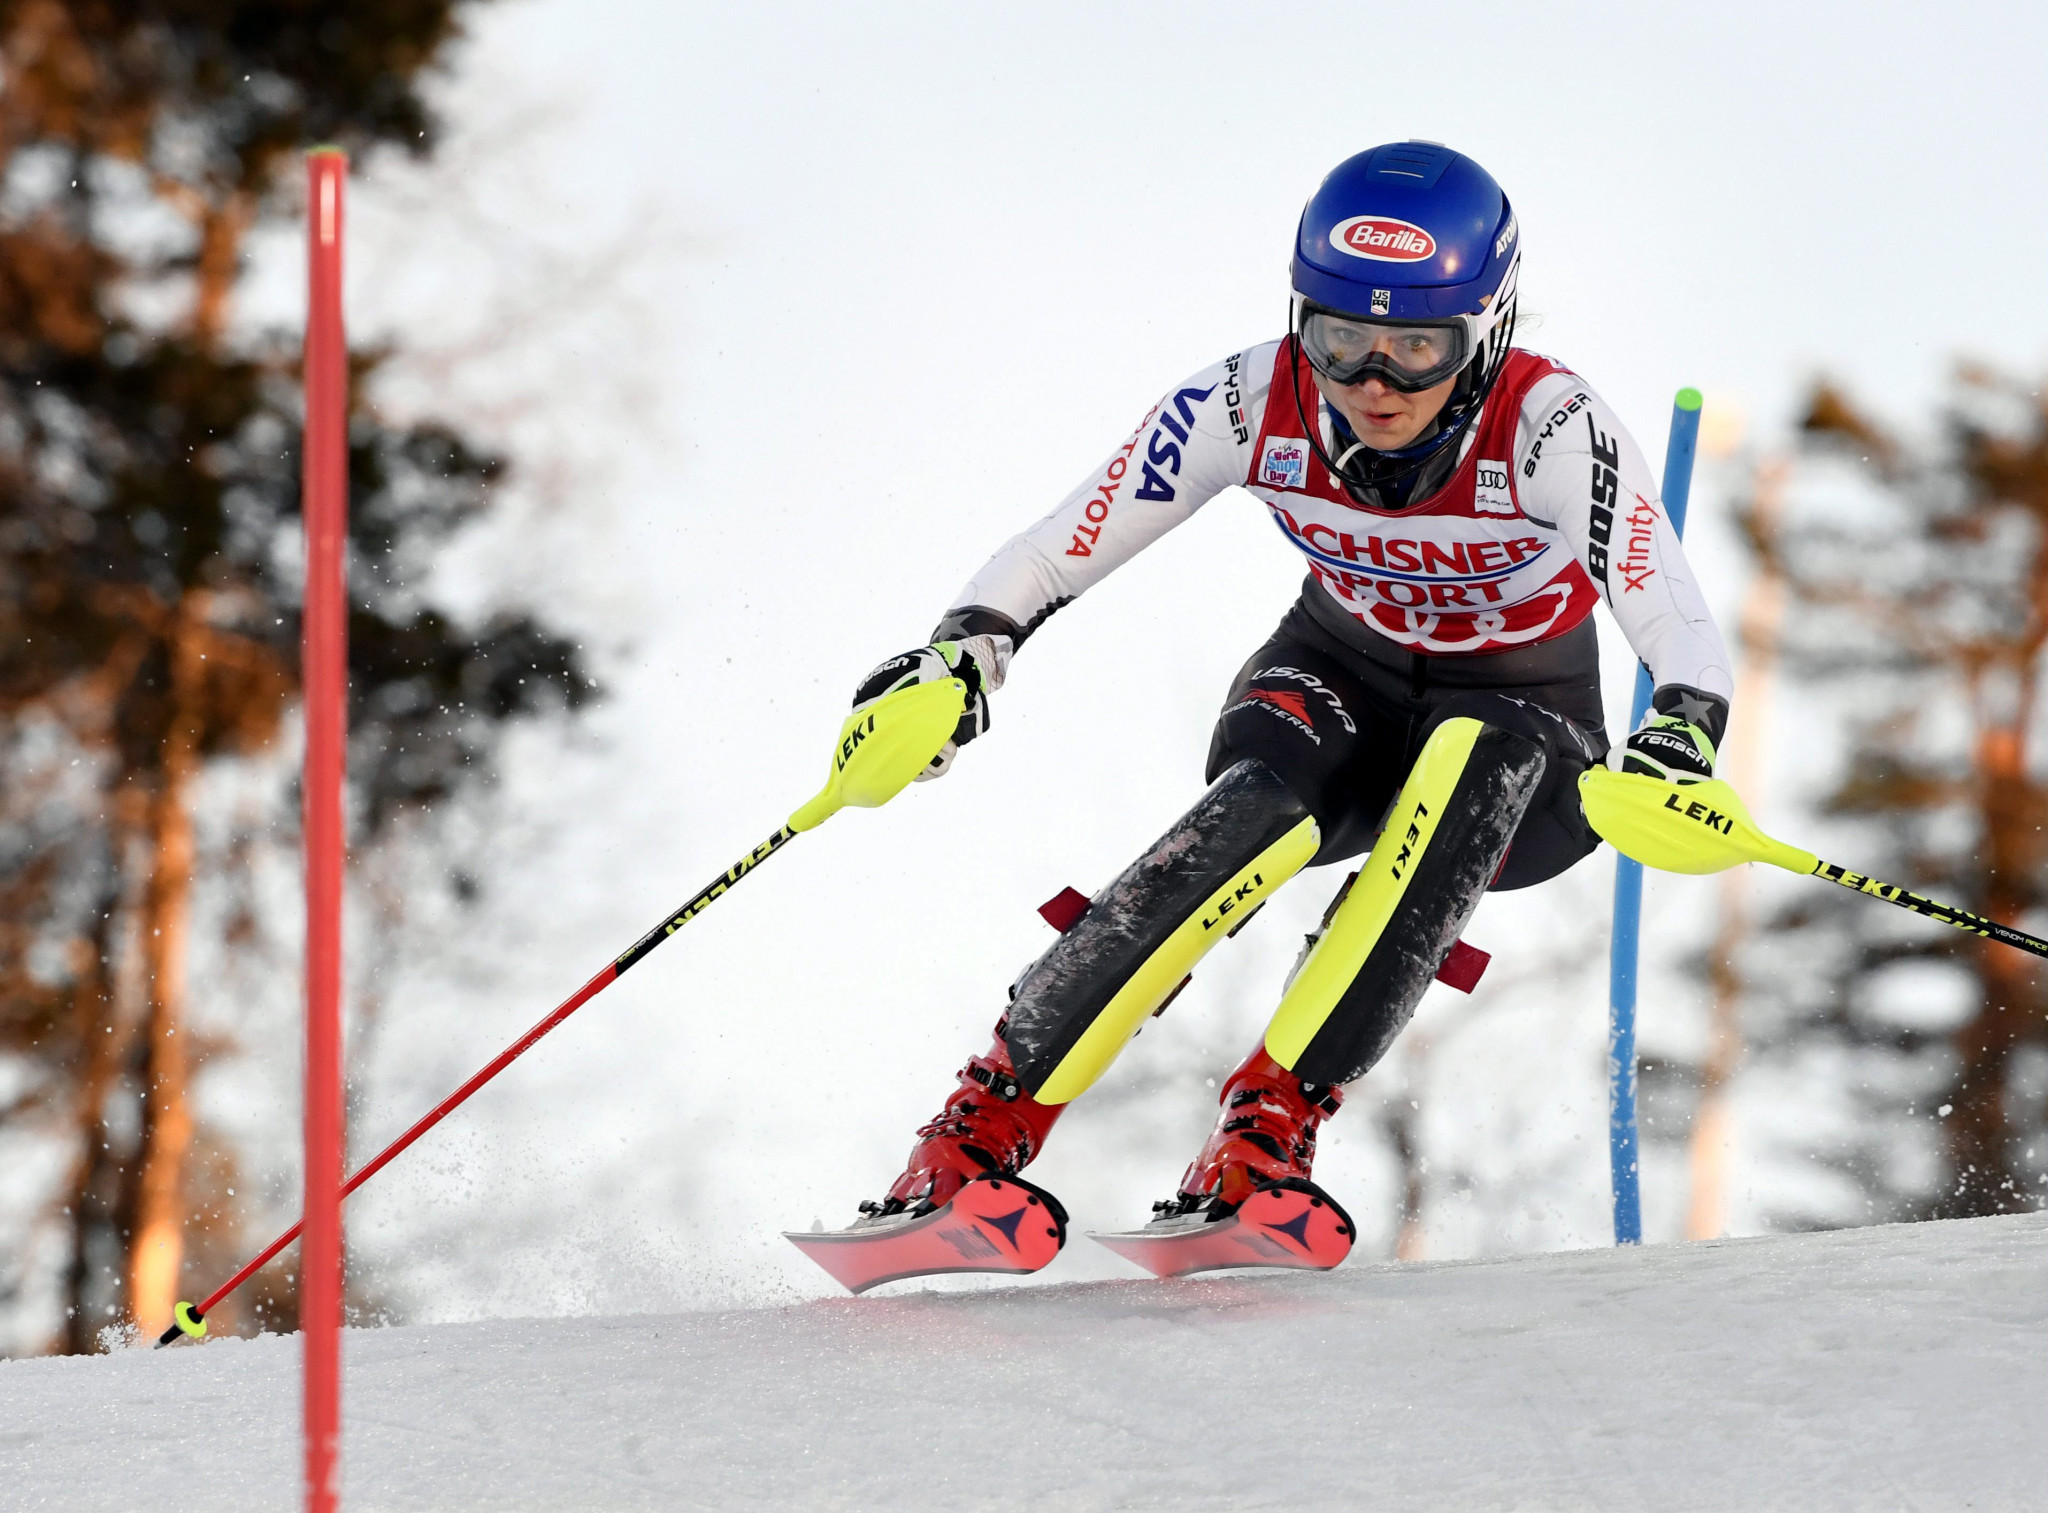 Mikaela Shiffrin will defend her 2017 slalom win in Killington on Sunday ©Getty Images